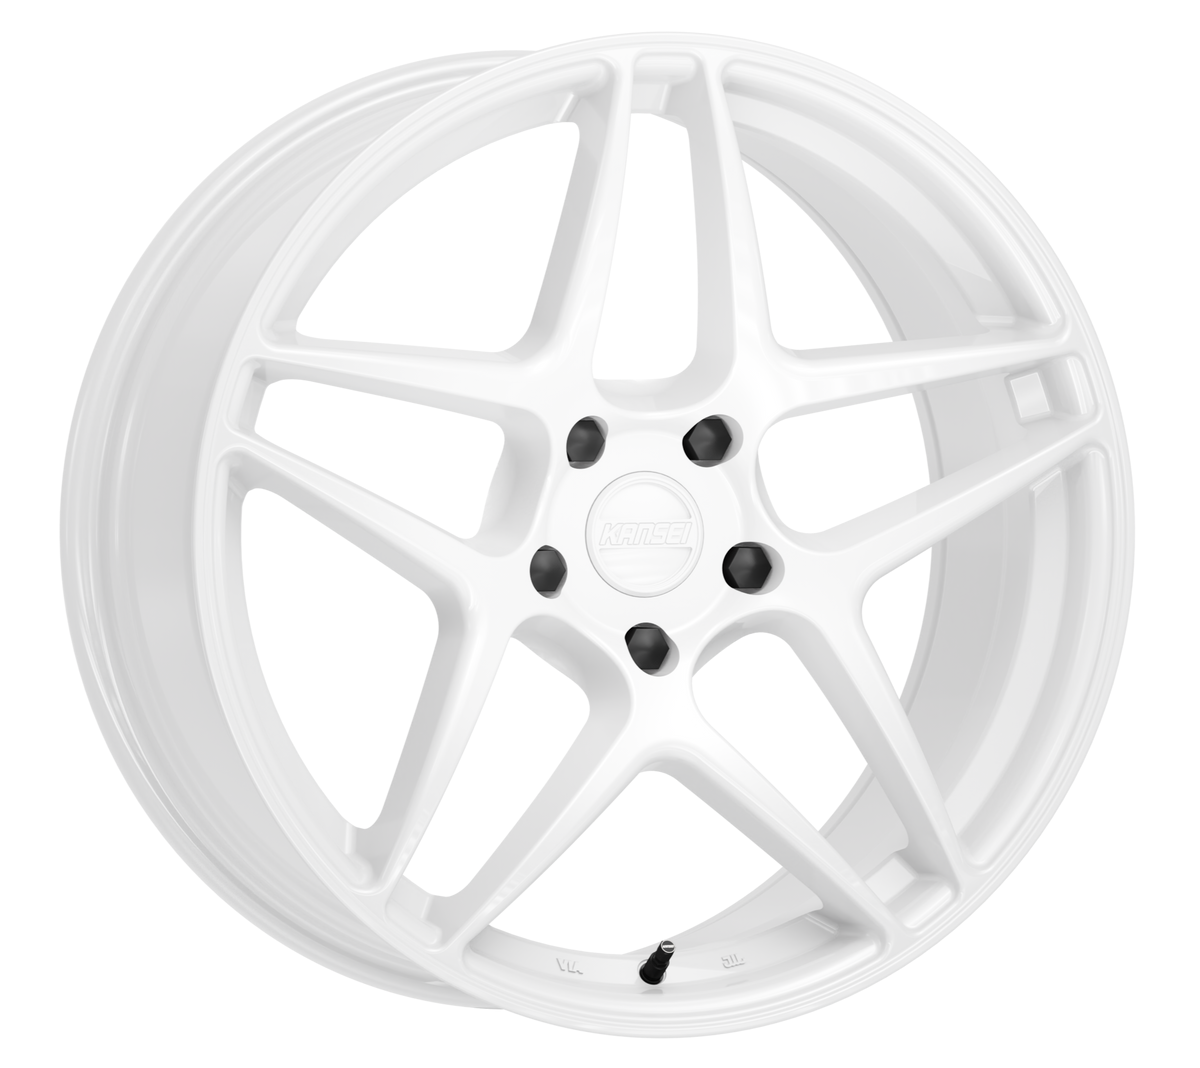 K15W ASTRO Wheel, Size: 19" x 10.50", Bolt Pattern: 5 x 112 mm, Backspace: 6.62" [Finish: Gloss White]